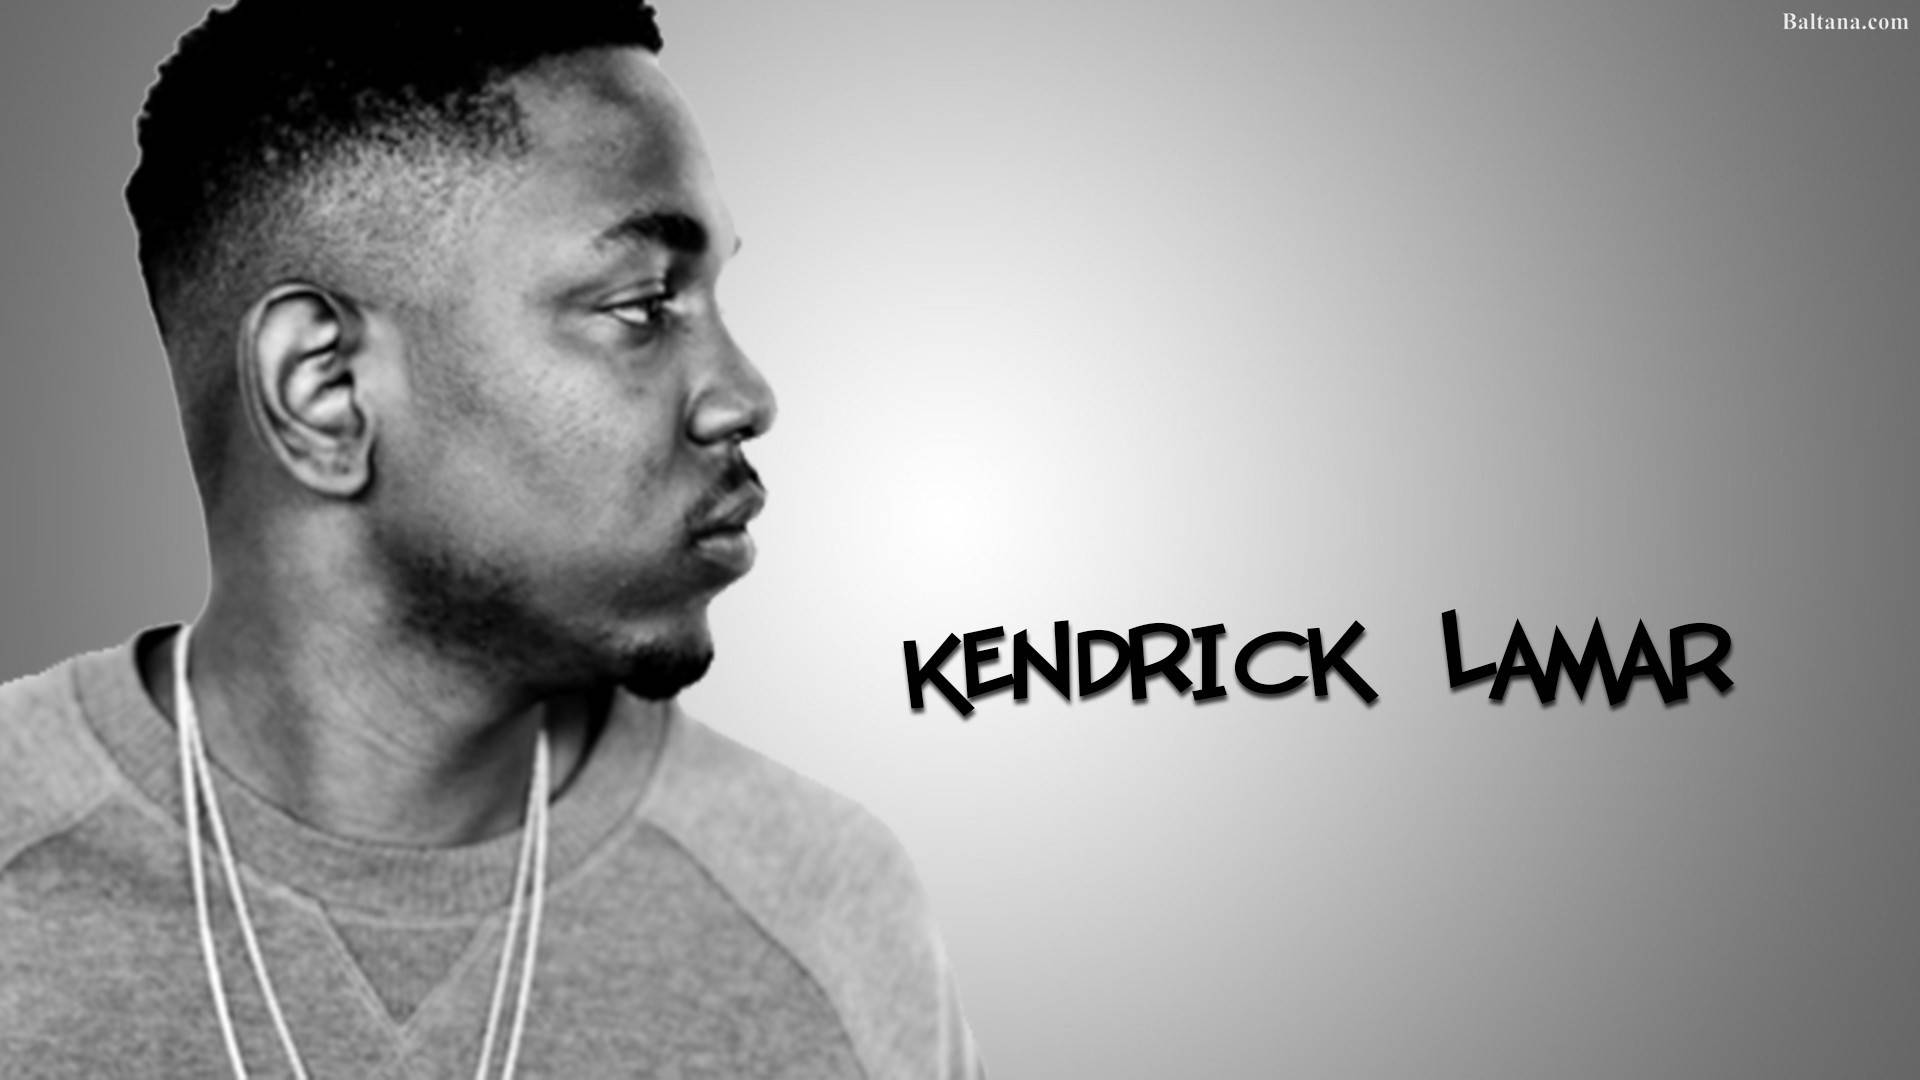 Kendrick Lamar 1920X1080 Wallpaper and Background Image